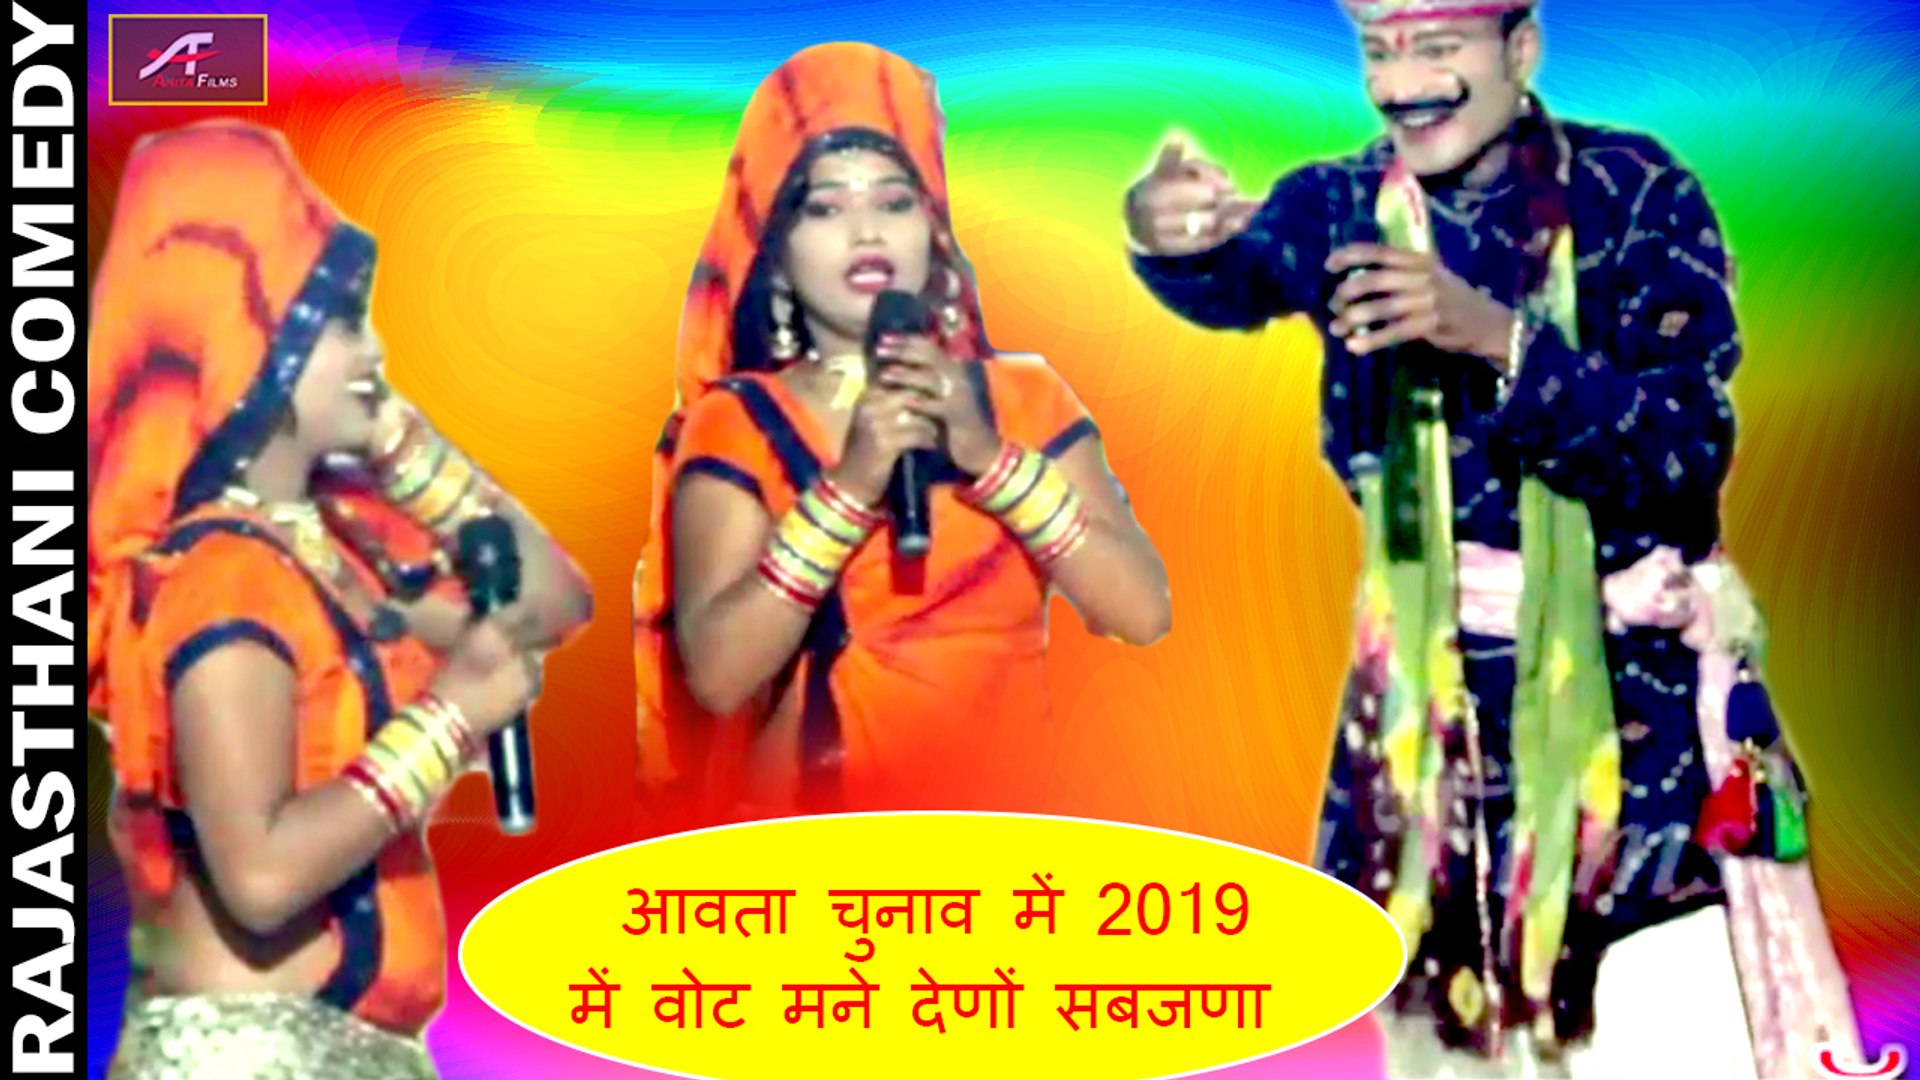 FULL Comedy Rajasthani | आवता चुनाव में 2019 में वोट मने देणों सबजणा |  Marwadi Comedy Video 2018 | Dehati Comedy Funny Videos | NON Stop Live -  Double Meaning Jokes - video Dailymotion